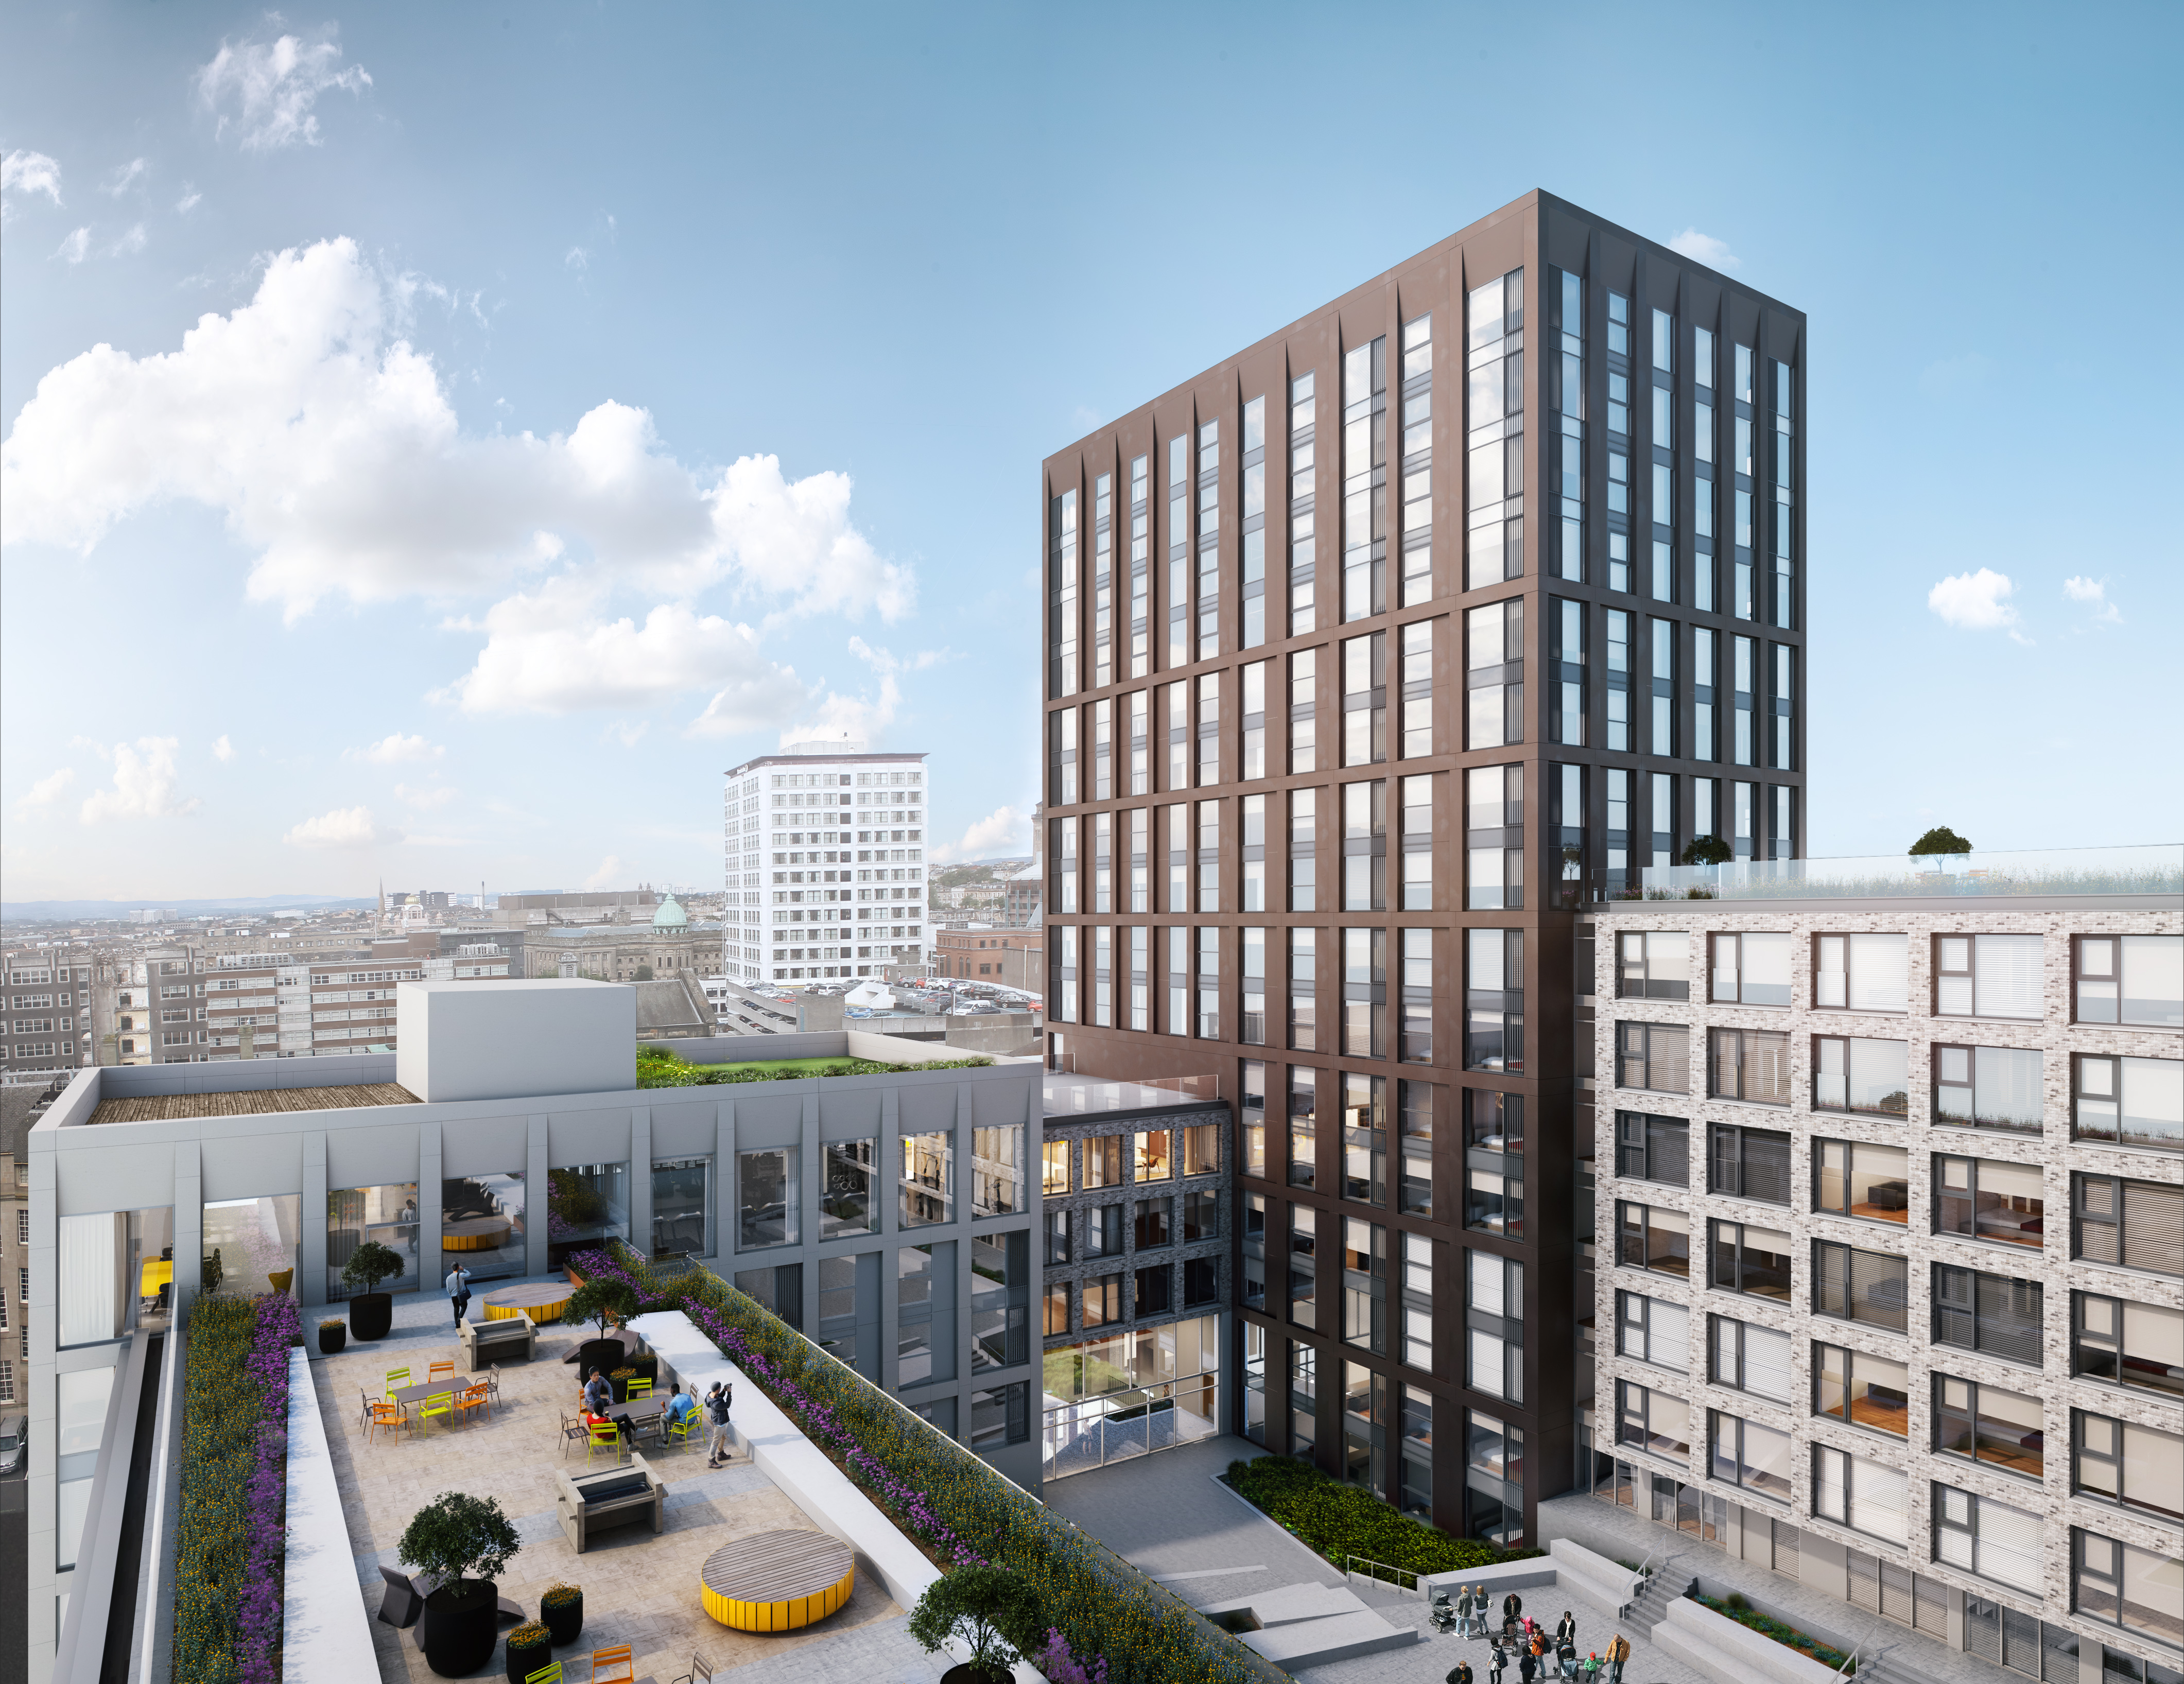 Major investors back build-to-rent development on site of former Glasgow police HQ